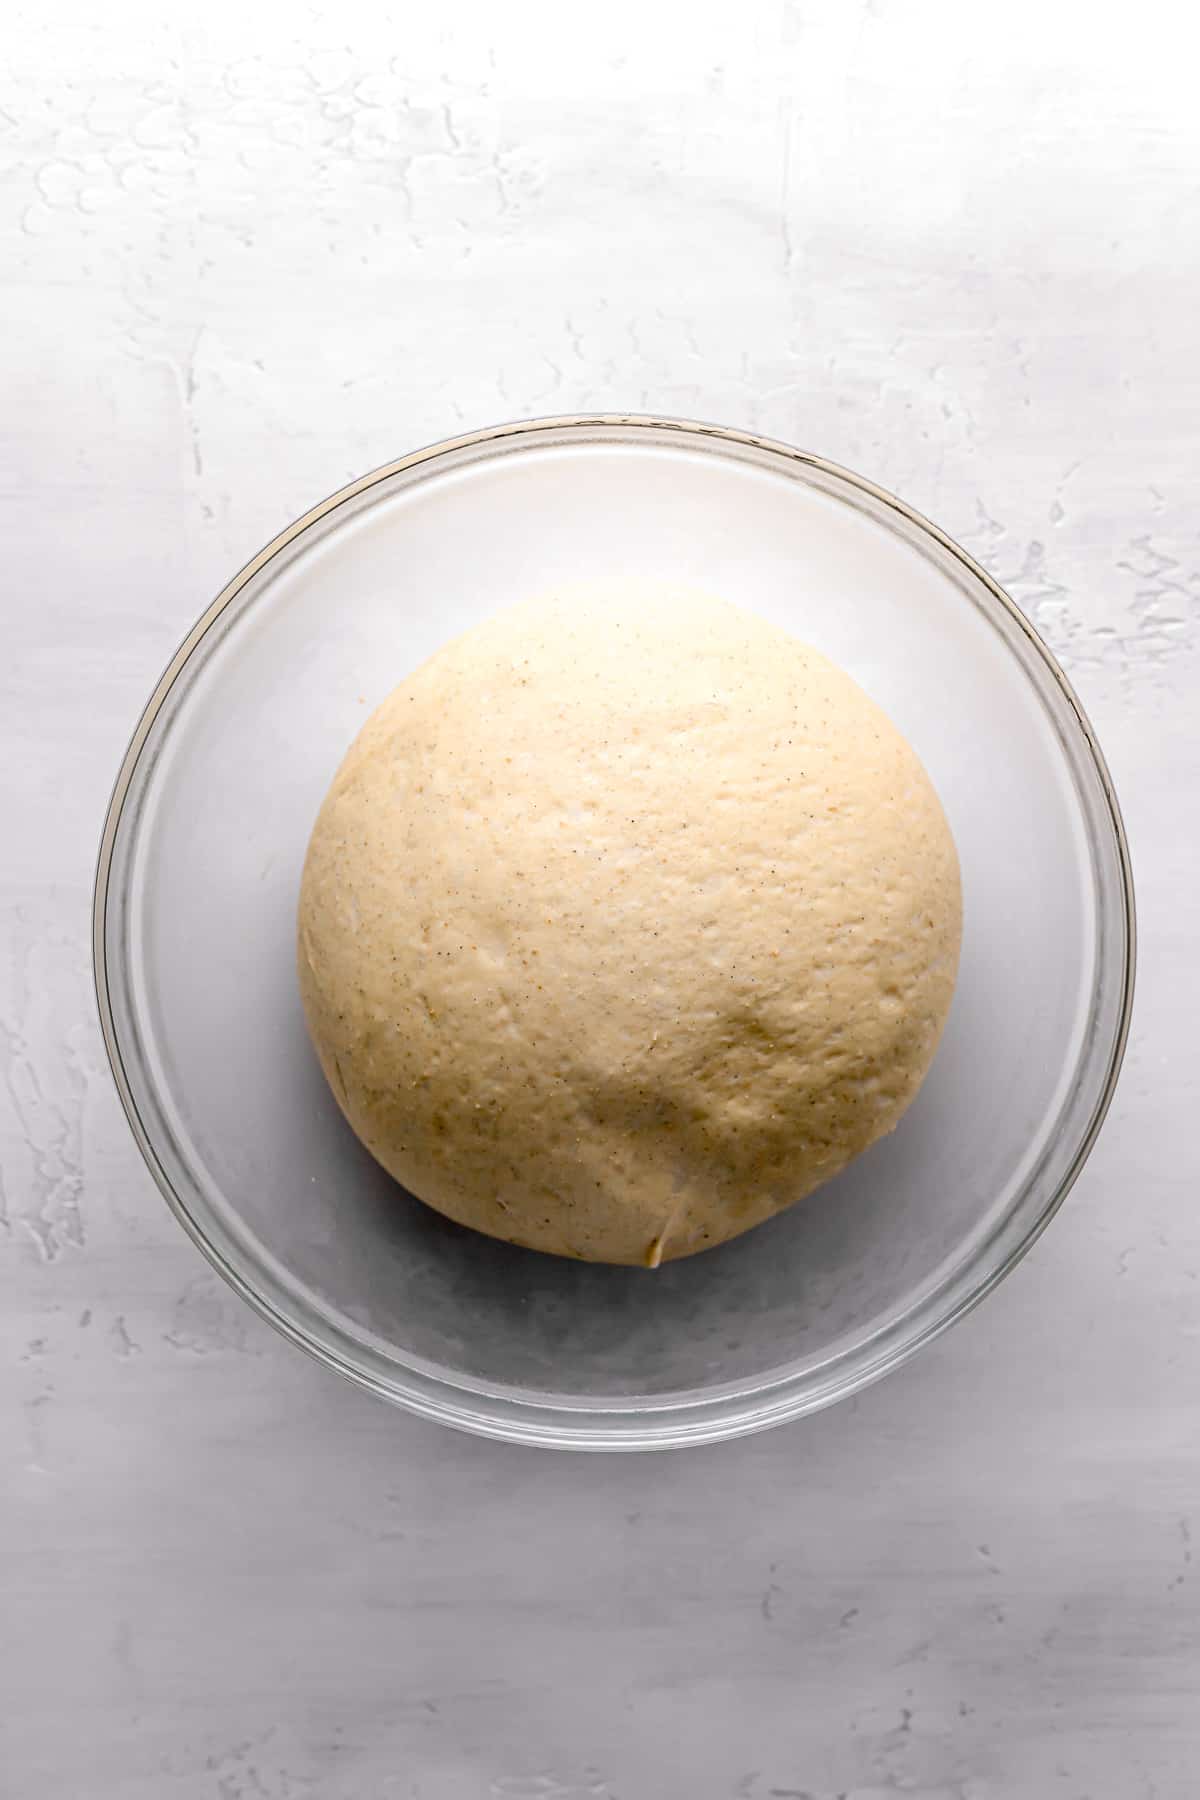 brioche dough after first rise.